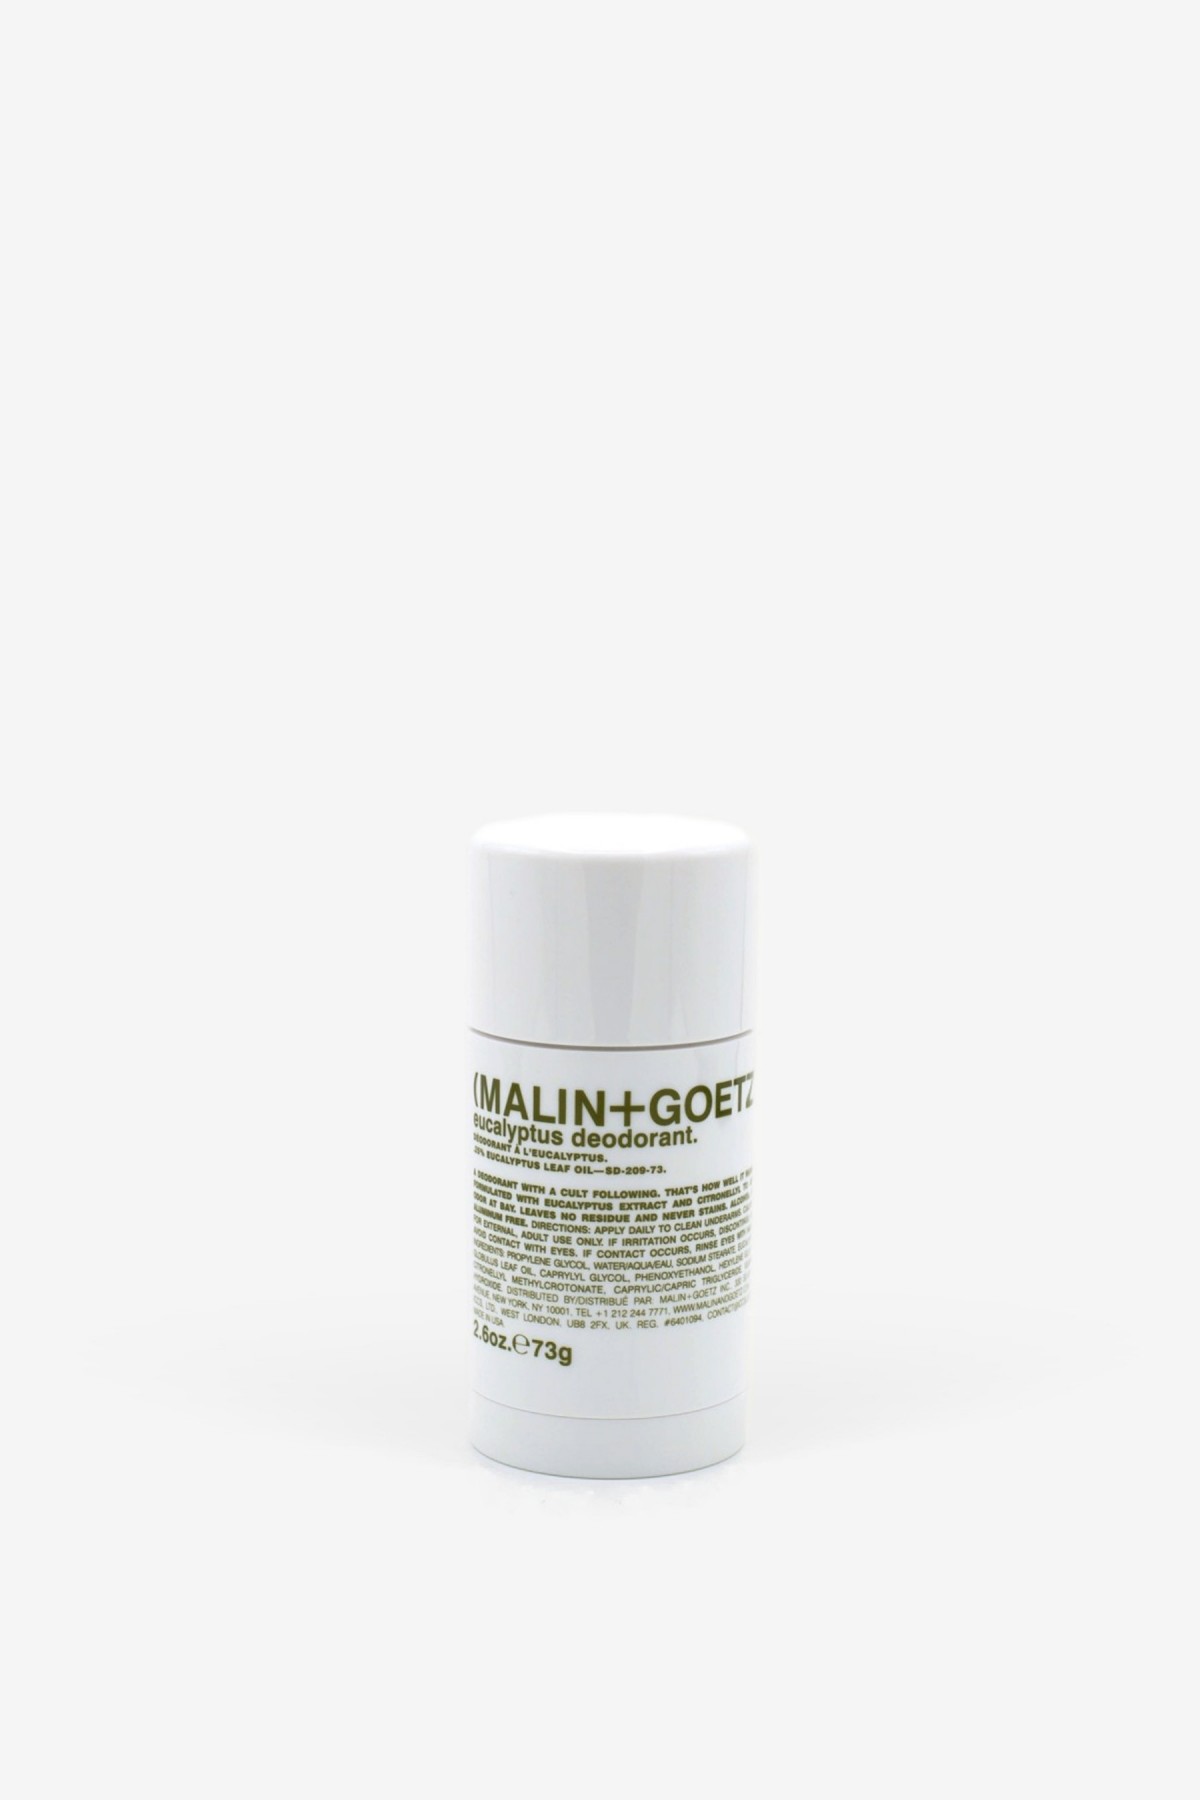 Malin+Goetz Eucalyptus Deodorant 73g in 